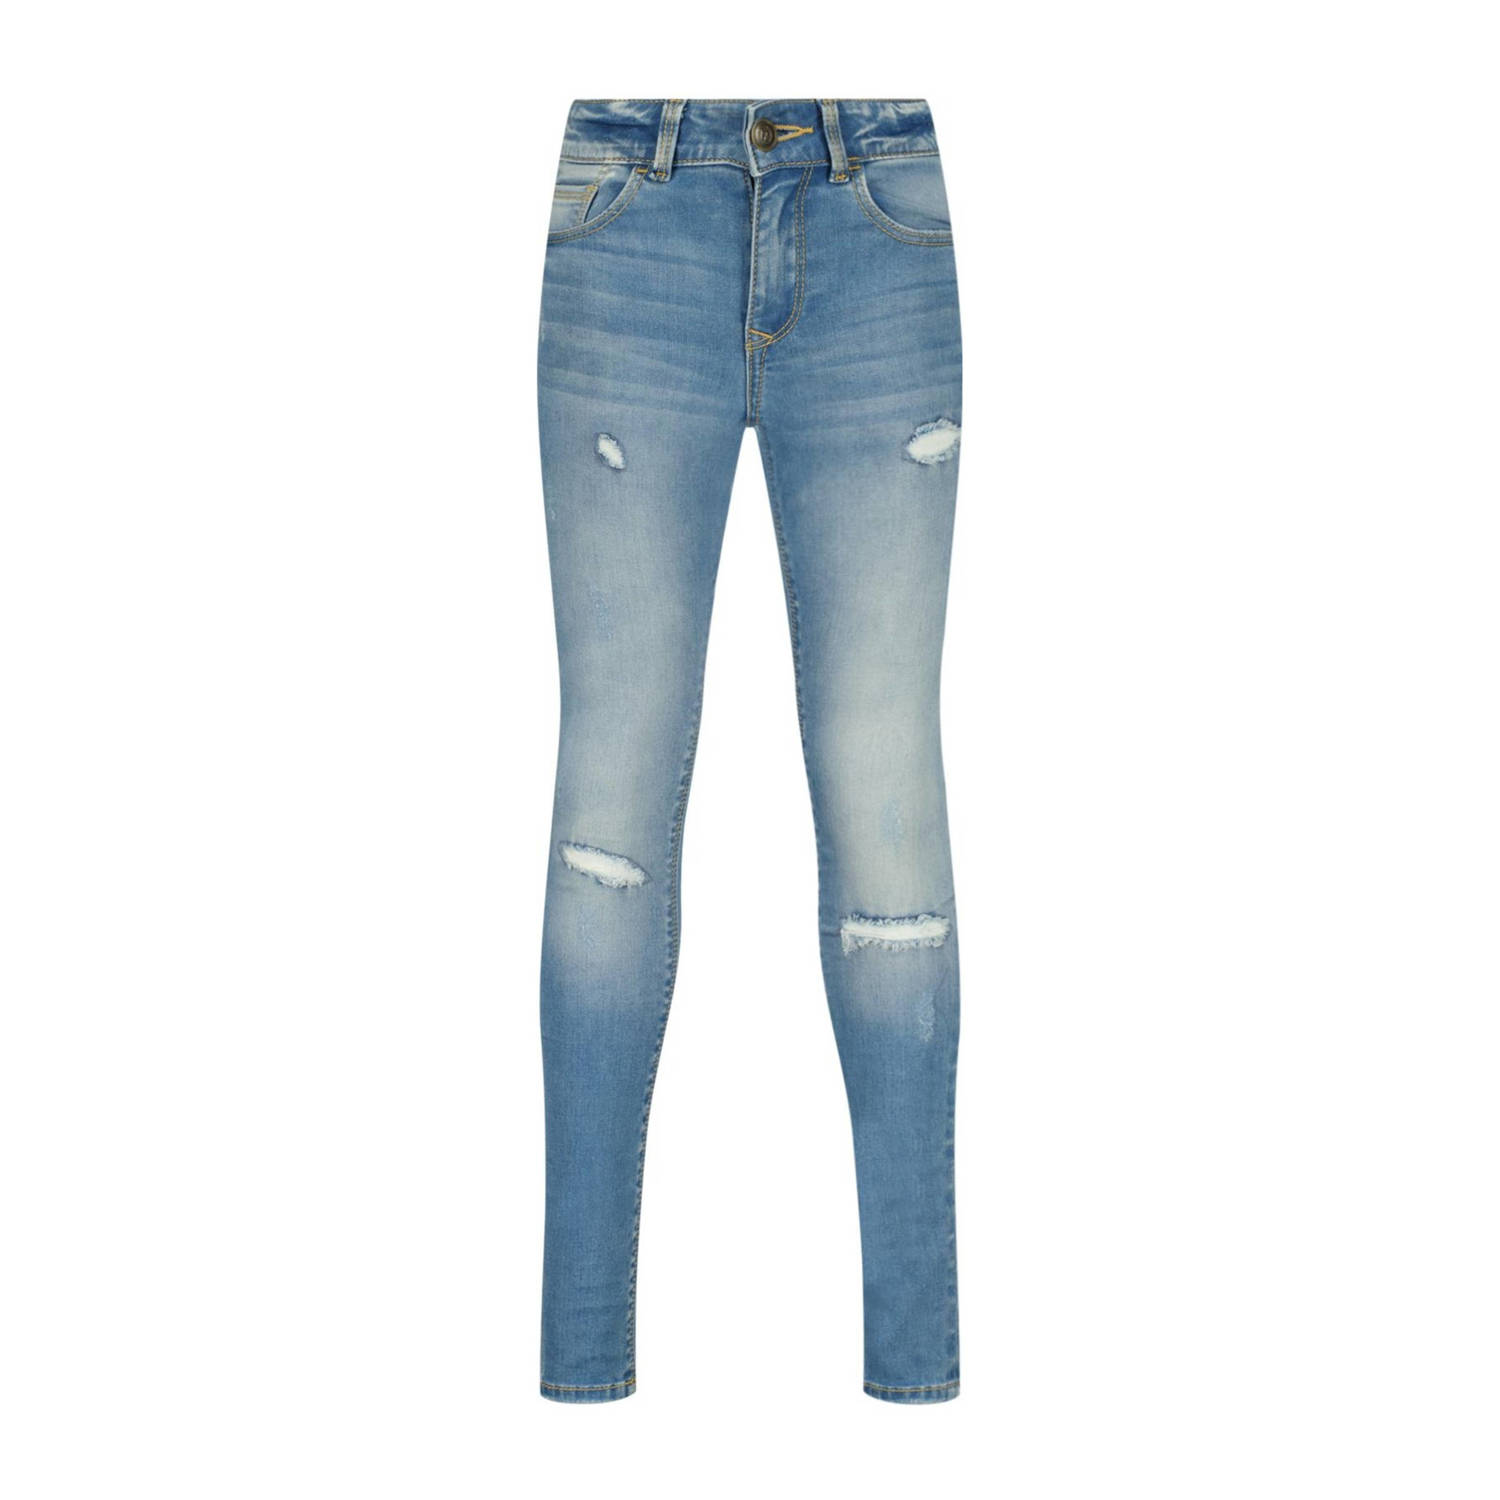 Raizzed skinny jeans Chelsea Crafted met slijtage mid blue stone Blauw Meisjes Stretchdenim 128